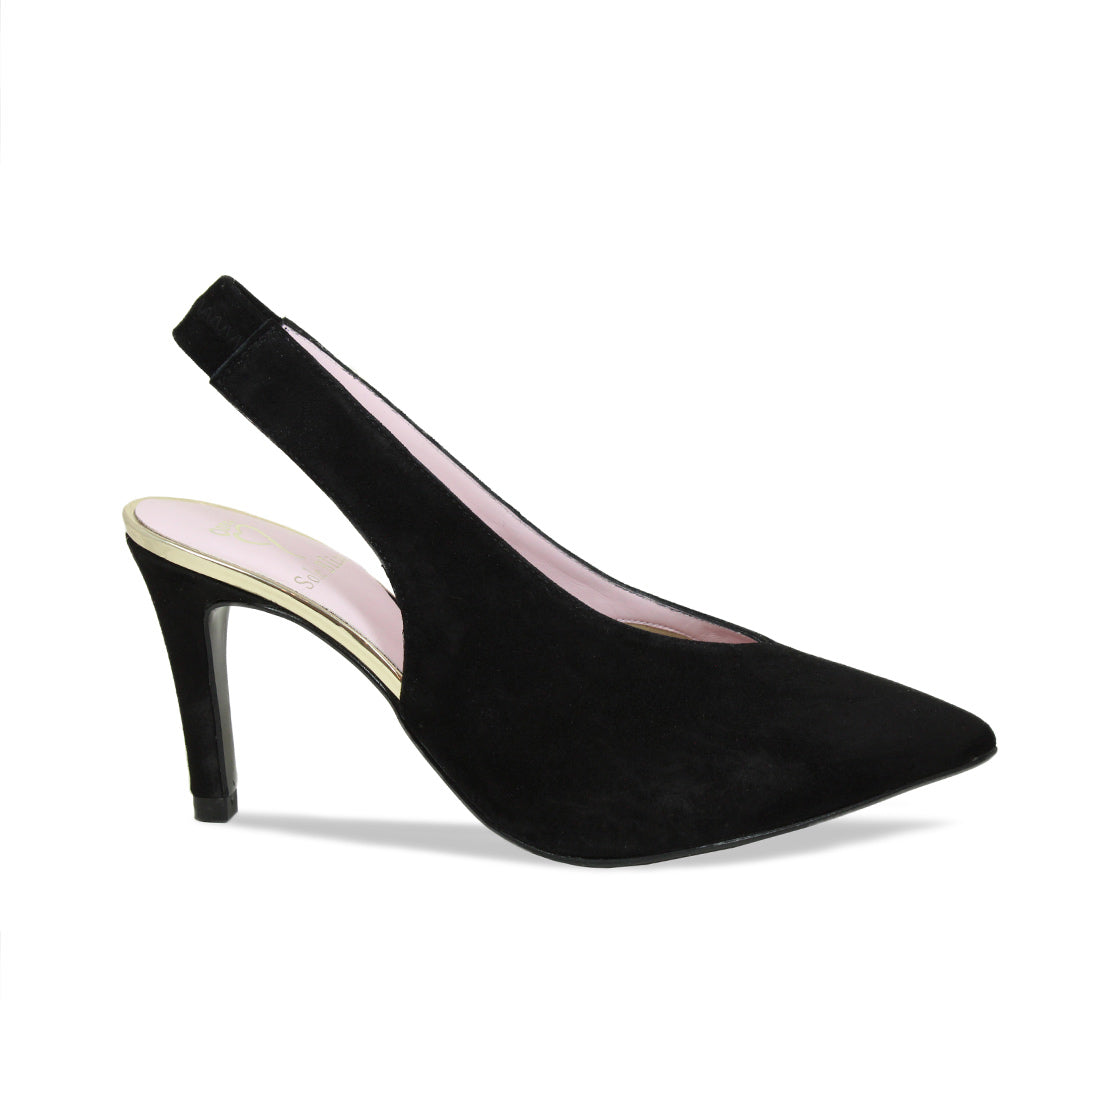 Moda Spana Black Zipper High Heels Size 9 Med. - Stretchy Comfortable -  Perfect! | eBay